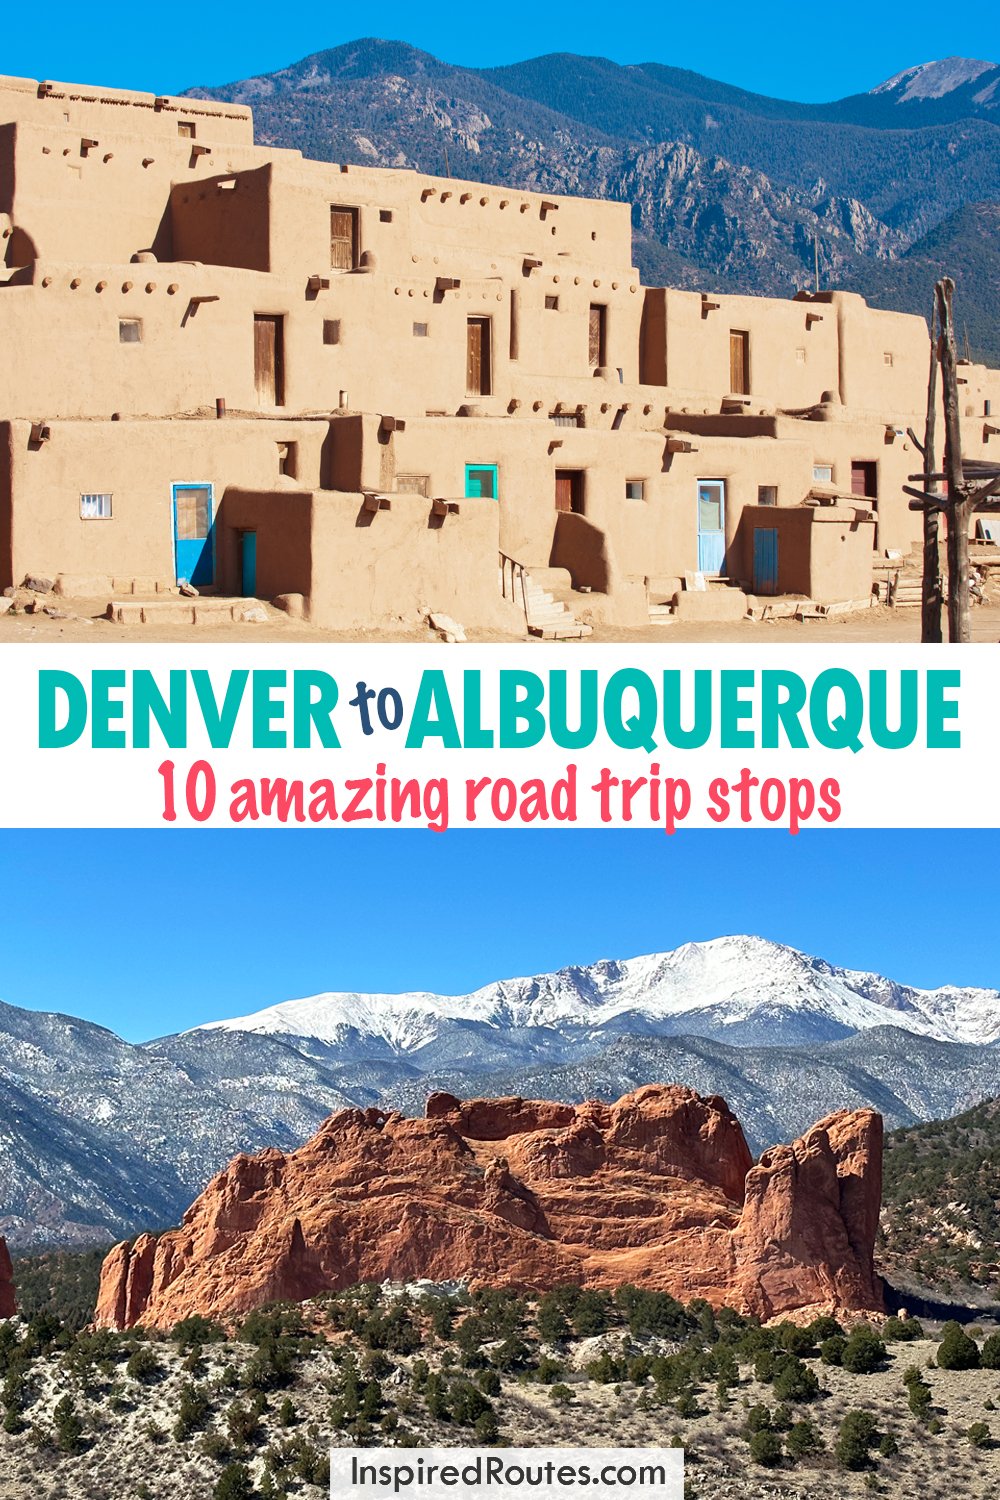 denver to Albuquerque 10 amazing road trip stops with photo of tan pueblos and mountain scenes